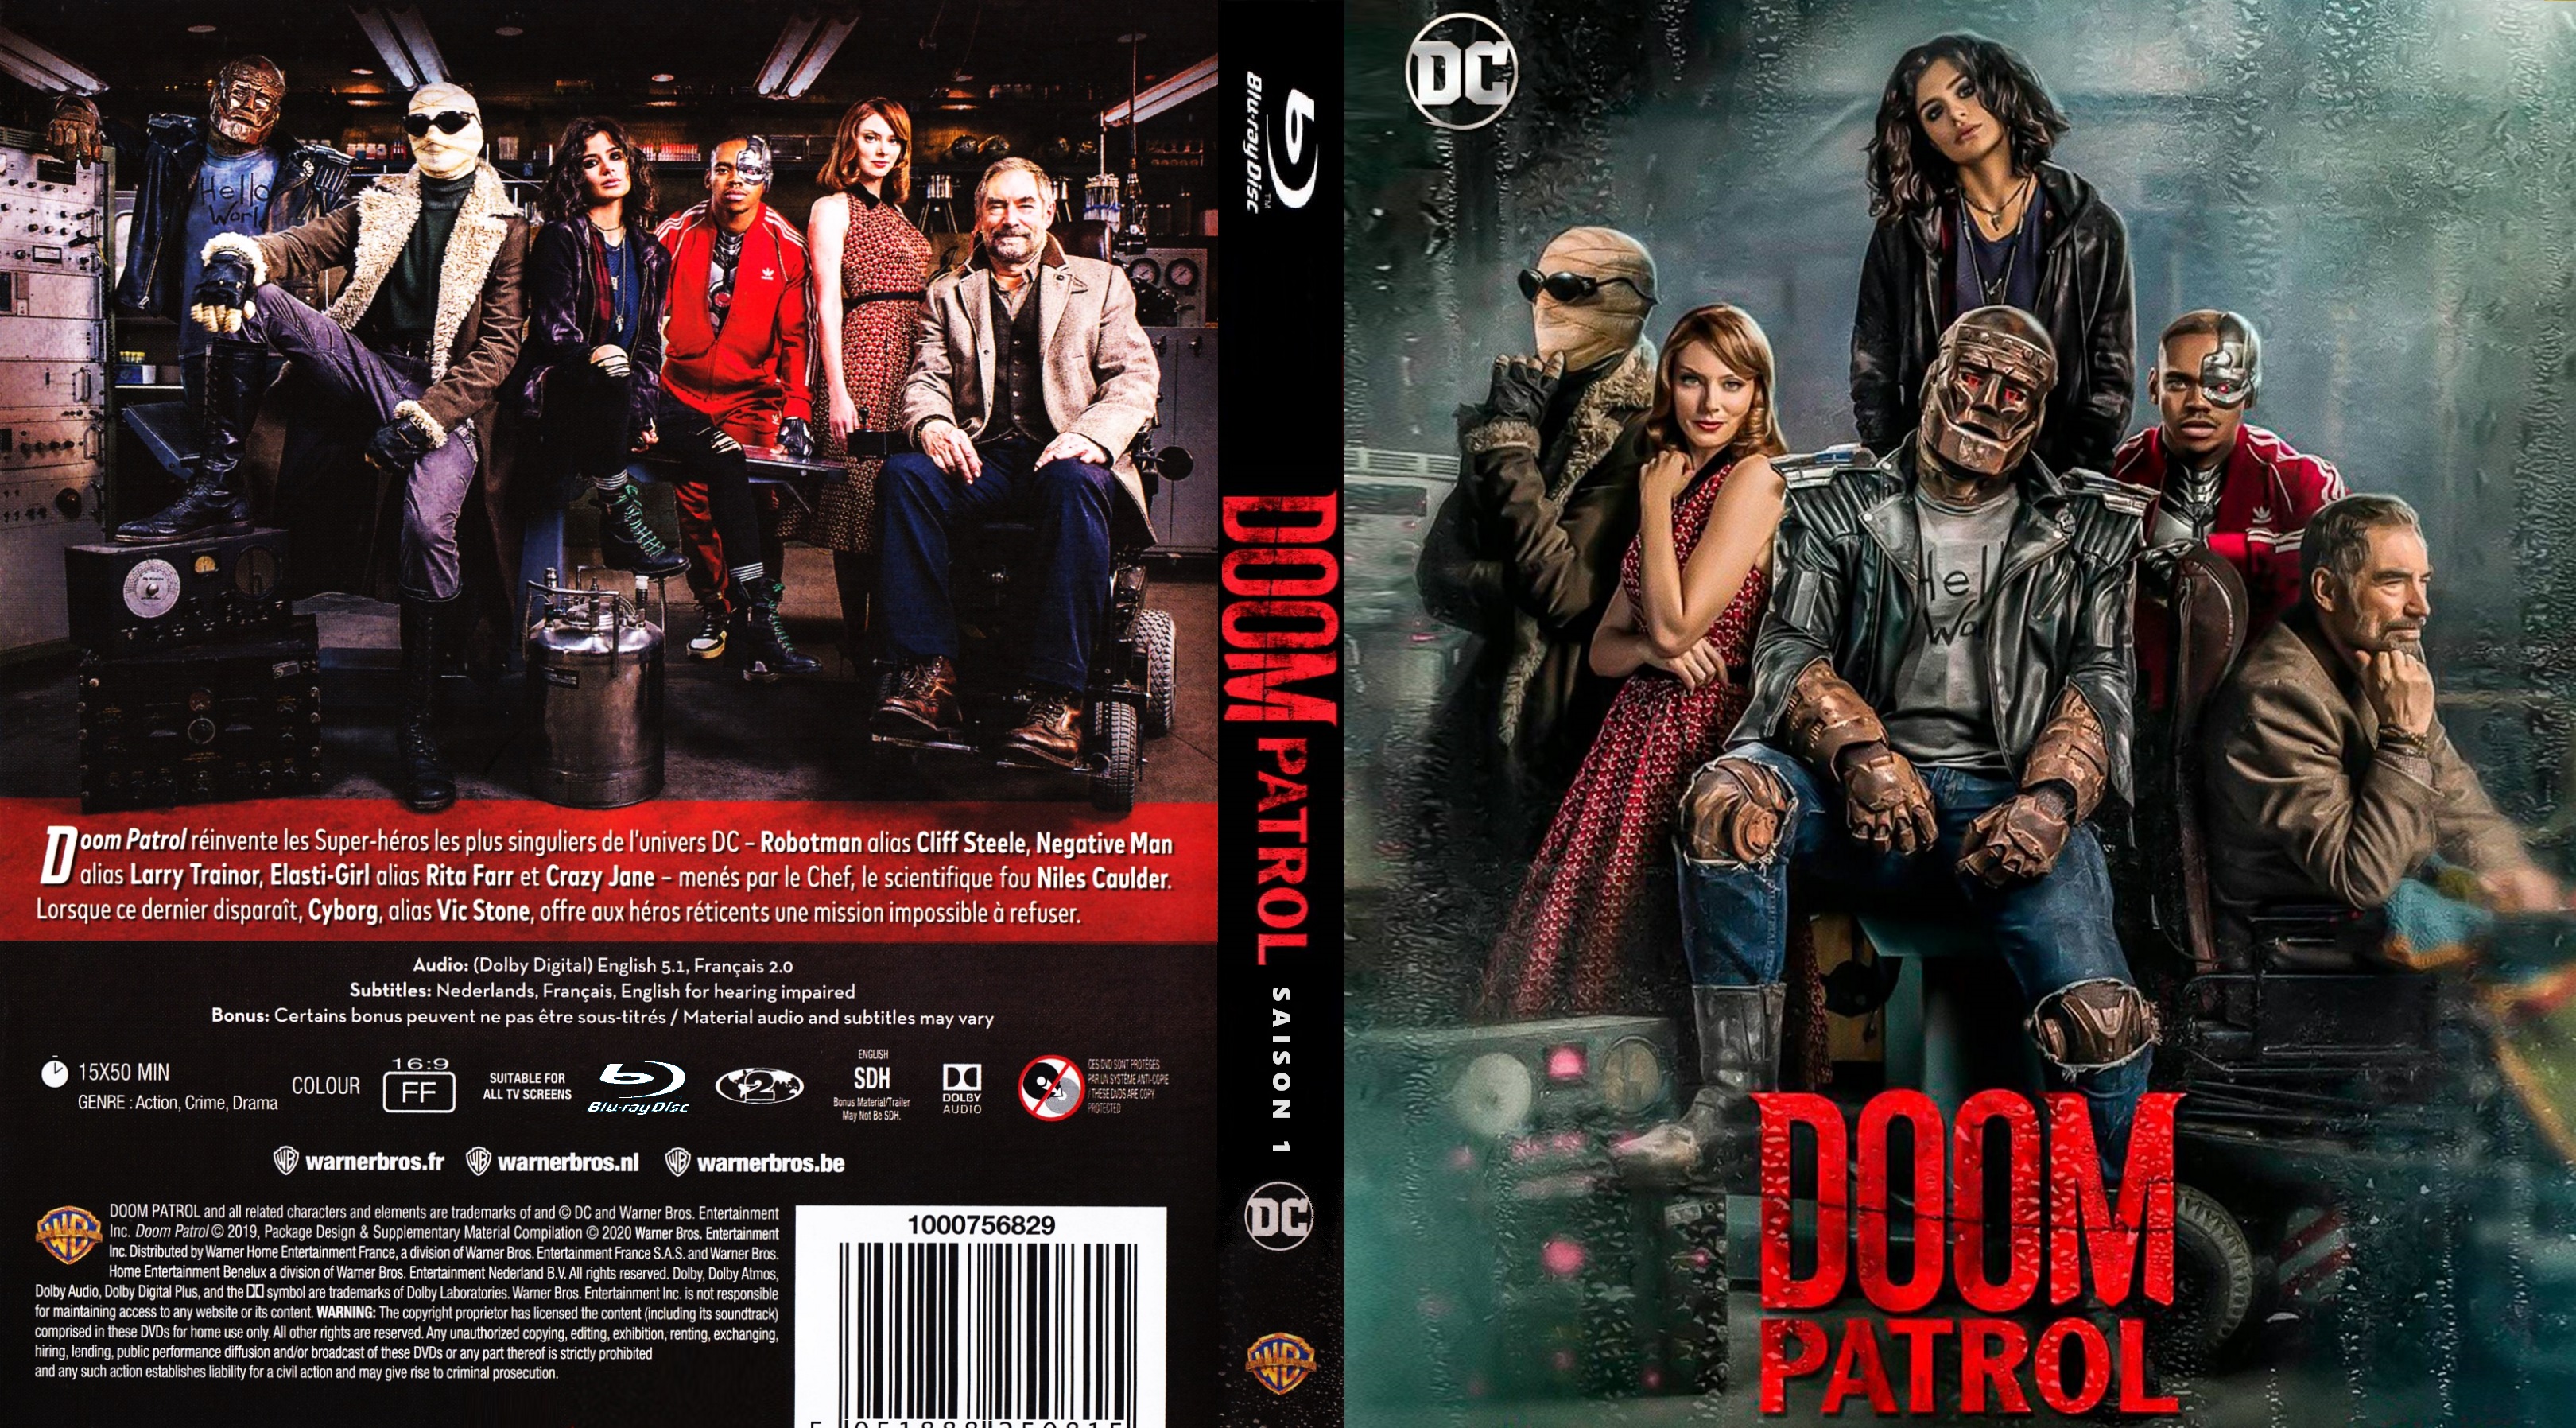 Jaquette DVD Doom Patrol saison 1 custom (BLU-RAY) v2